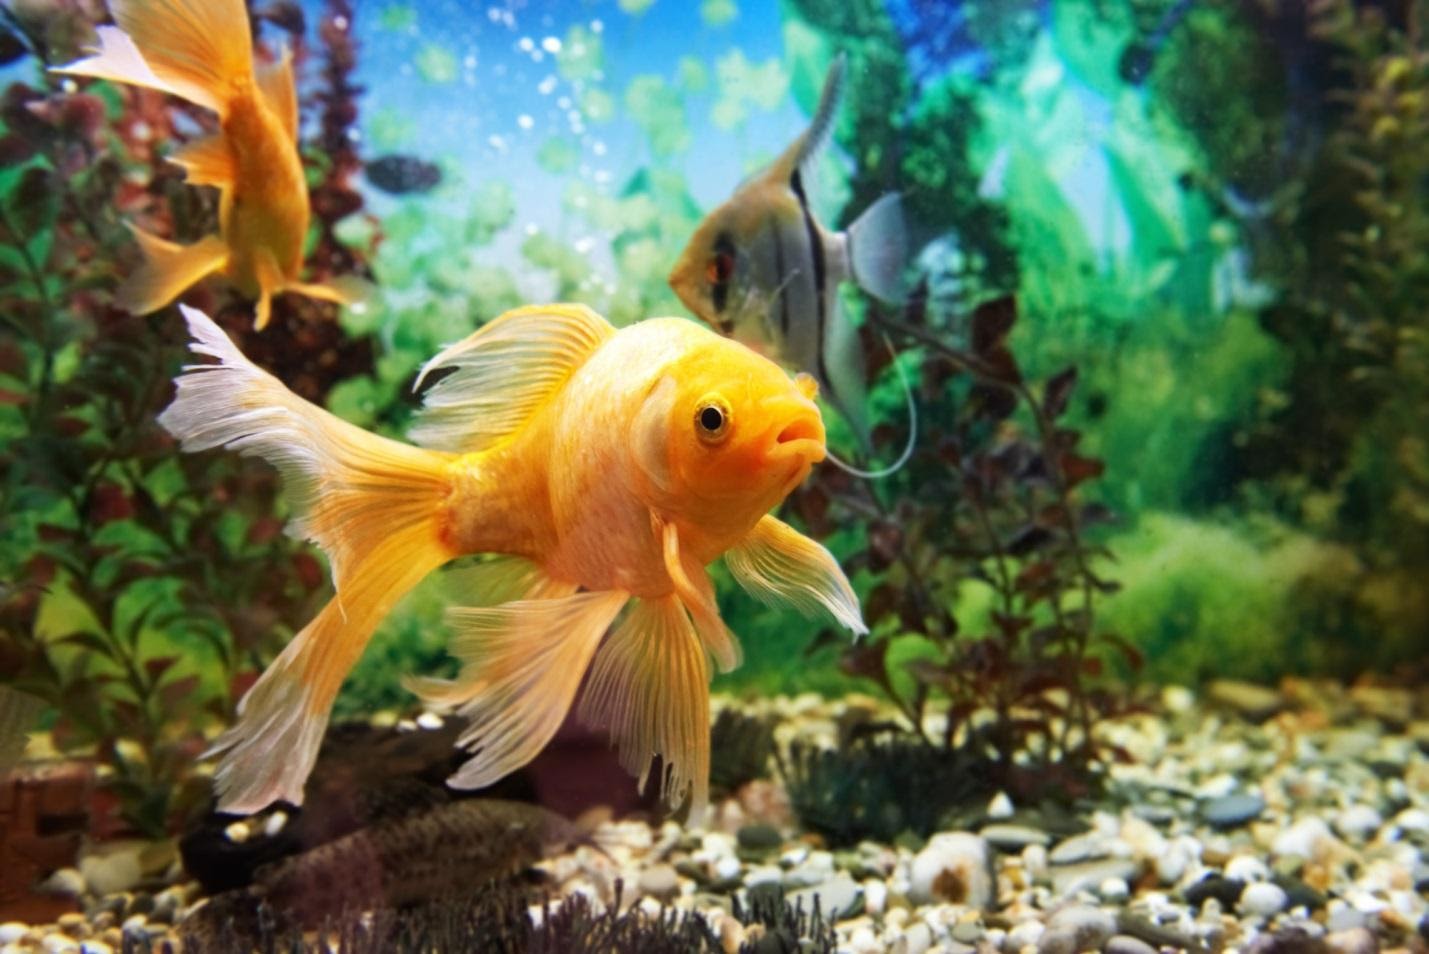 6 Fun Aquarium Decor Ideas to Make Your Fish Tank More Interesting